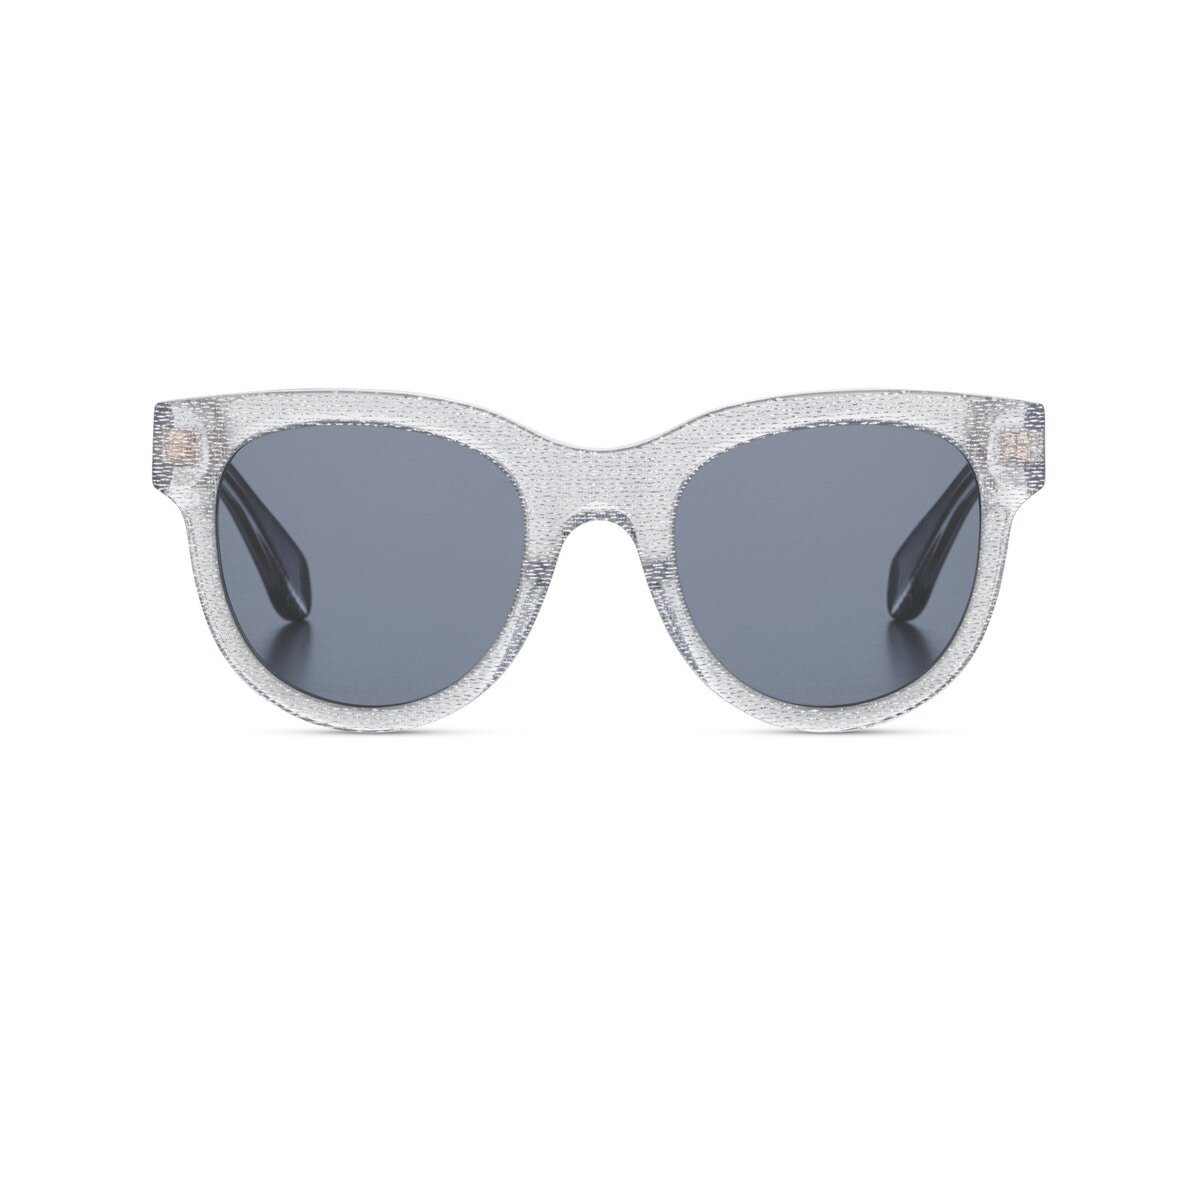 Luxury Sunglasses by Orgreen - Ride Sunglasses — The View Eyewear